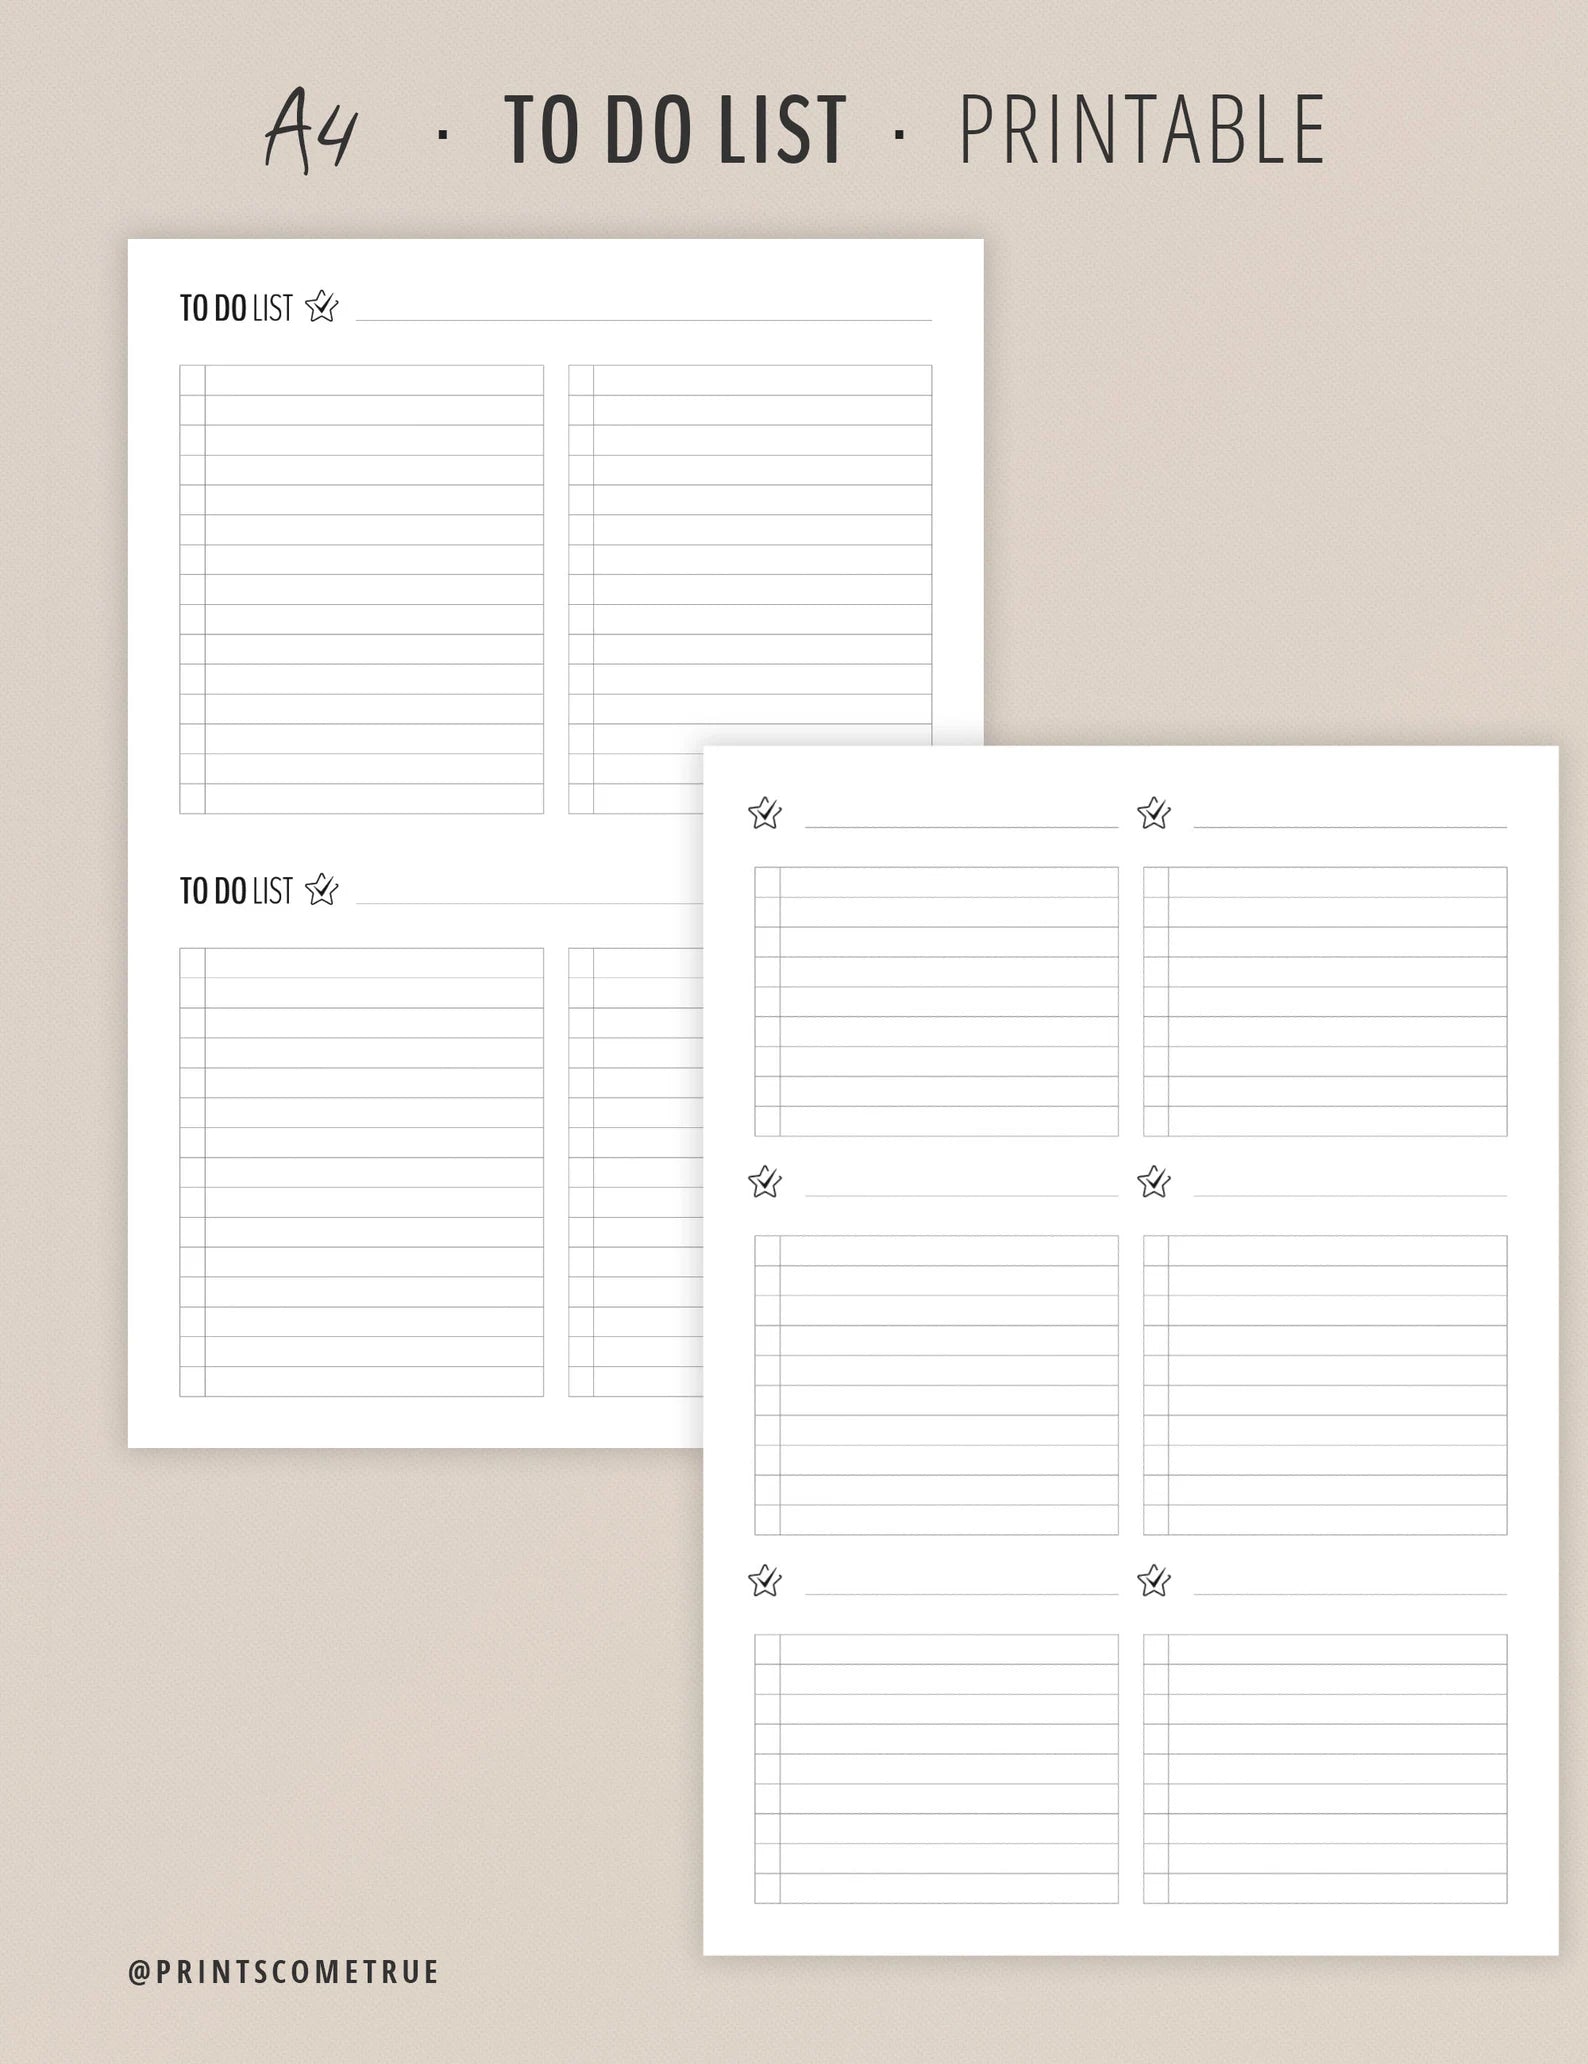 To Do List - Printable Planner A4 - 3